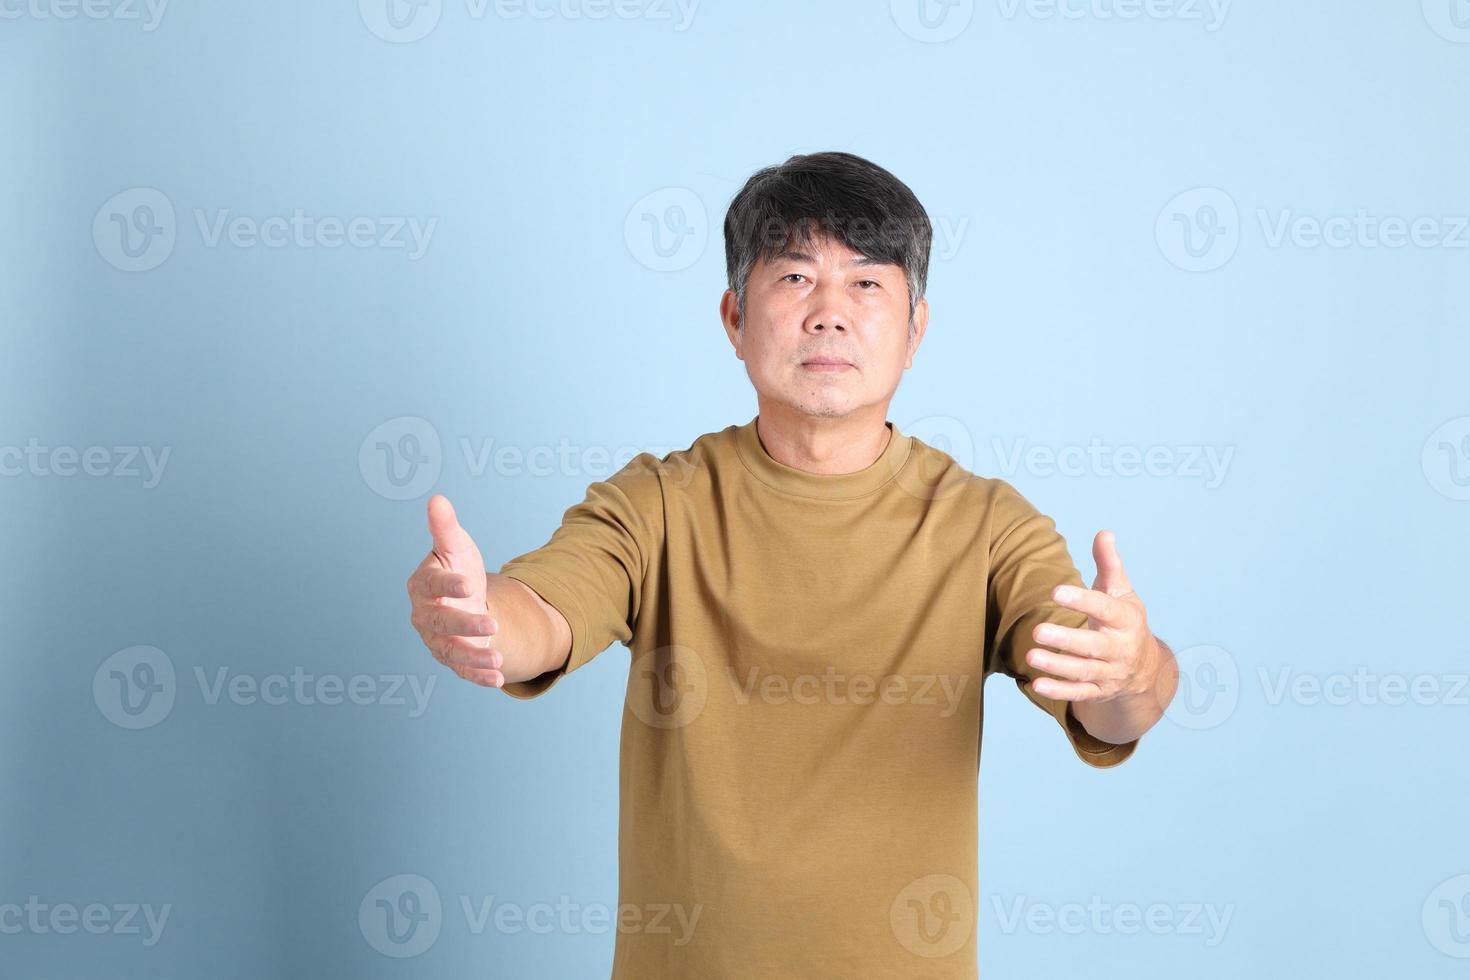 Senior Asian Man photo